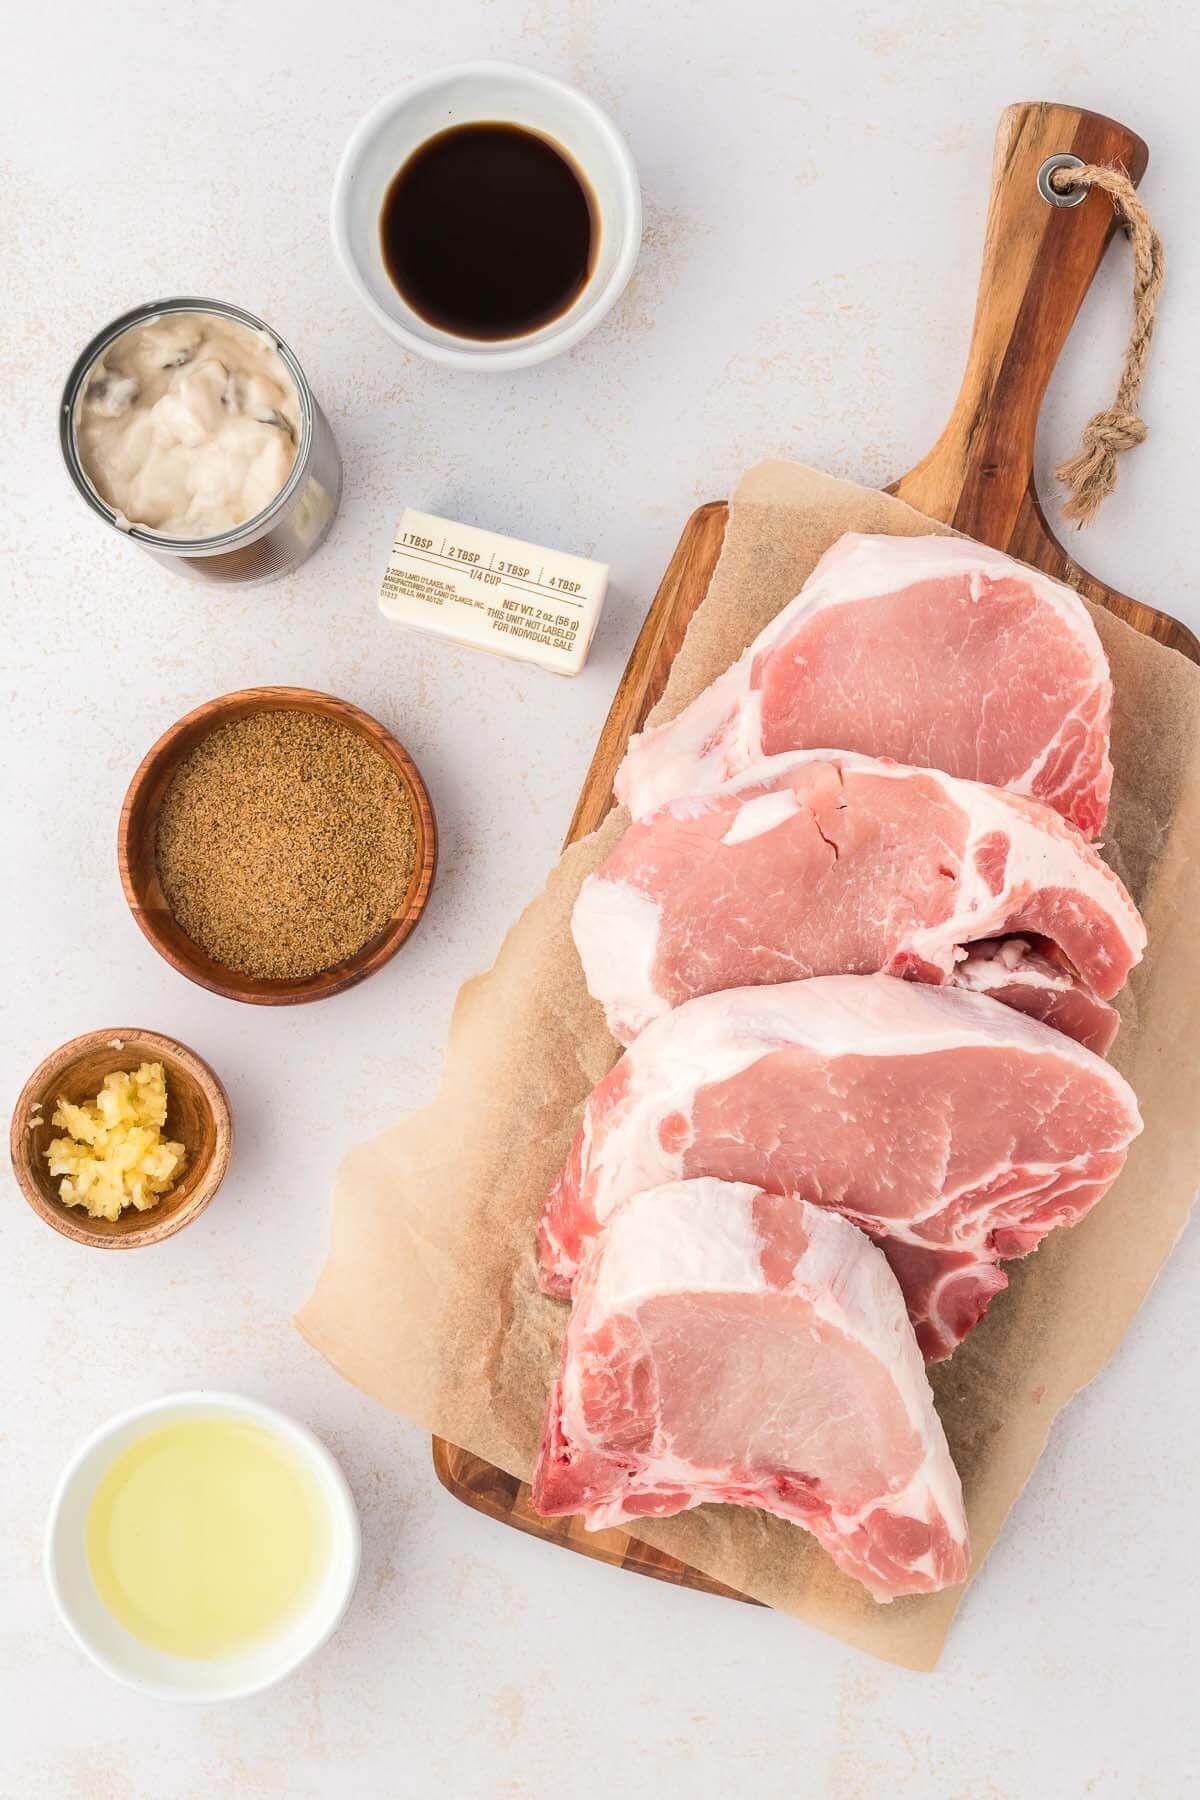 Ingredients to make baked pork chops.